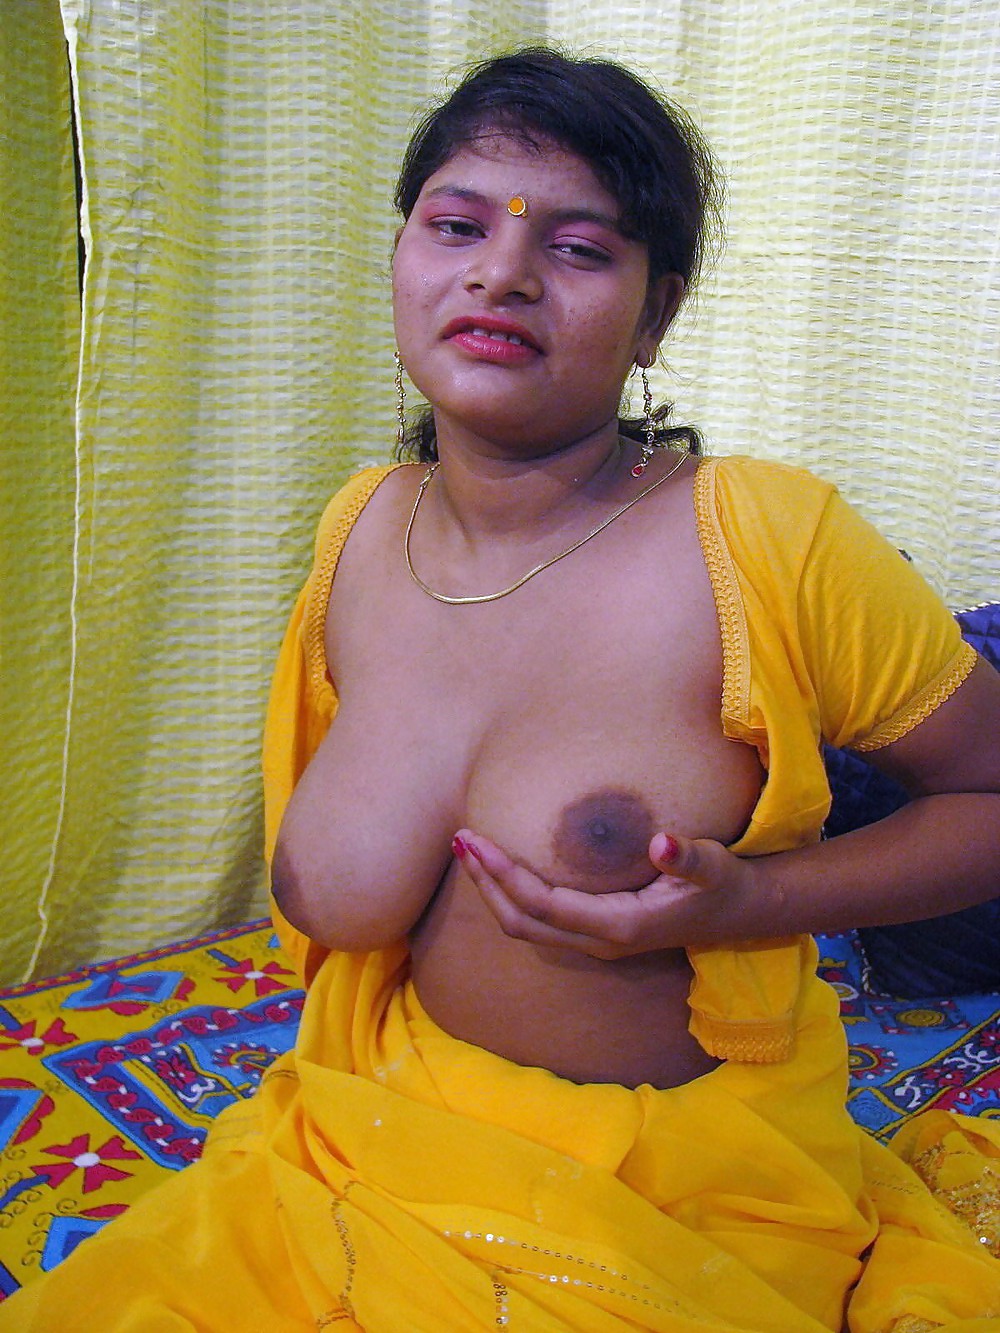 Desi Bala Chaud Et Sexy - Hardcore Indien #24976647